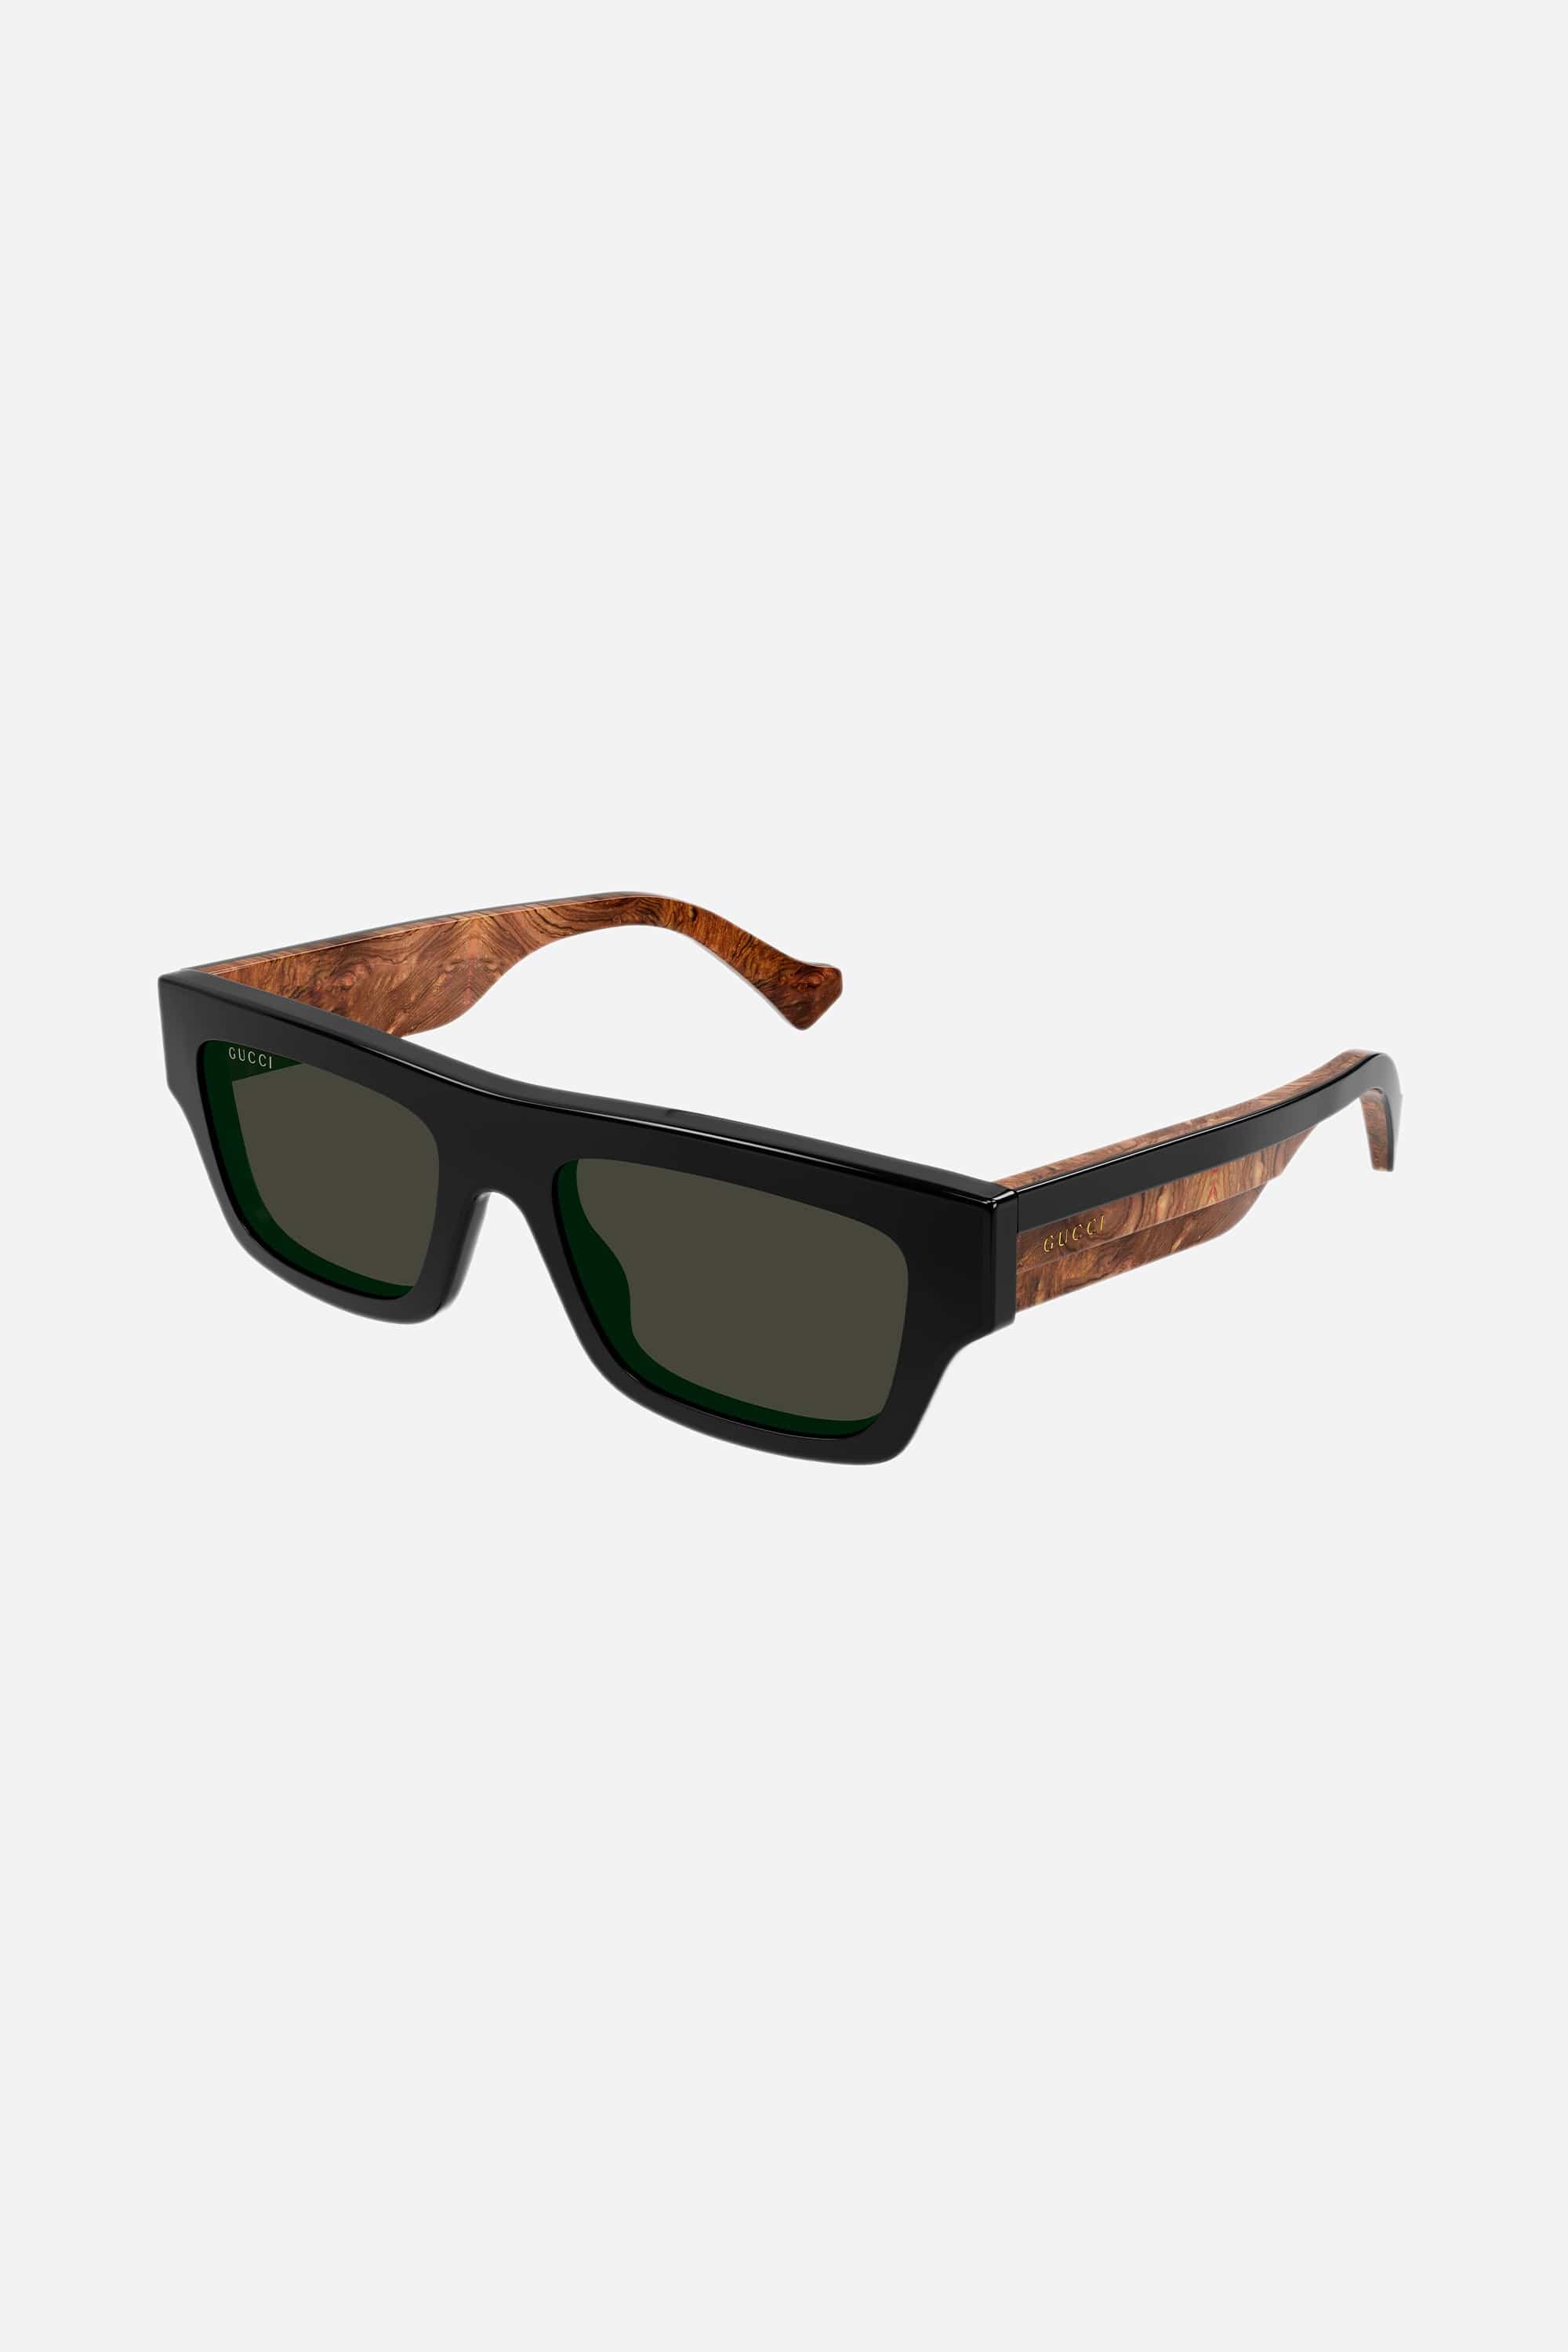 Gucci flat top black sunglasses with web temple - Eyewear Club